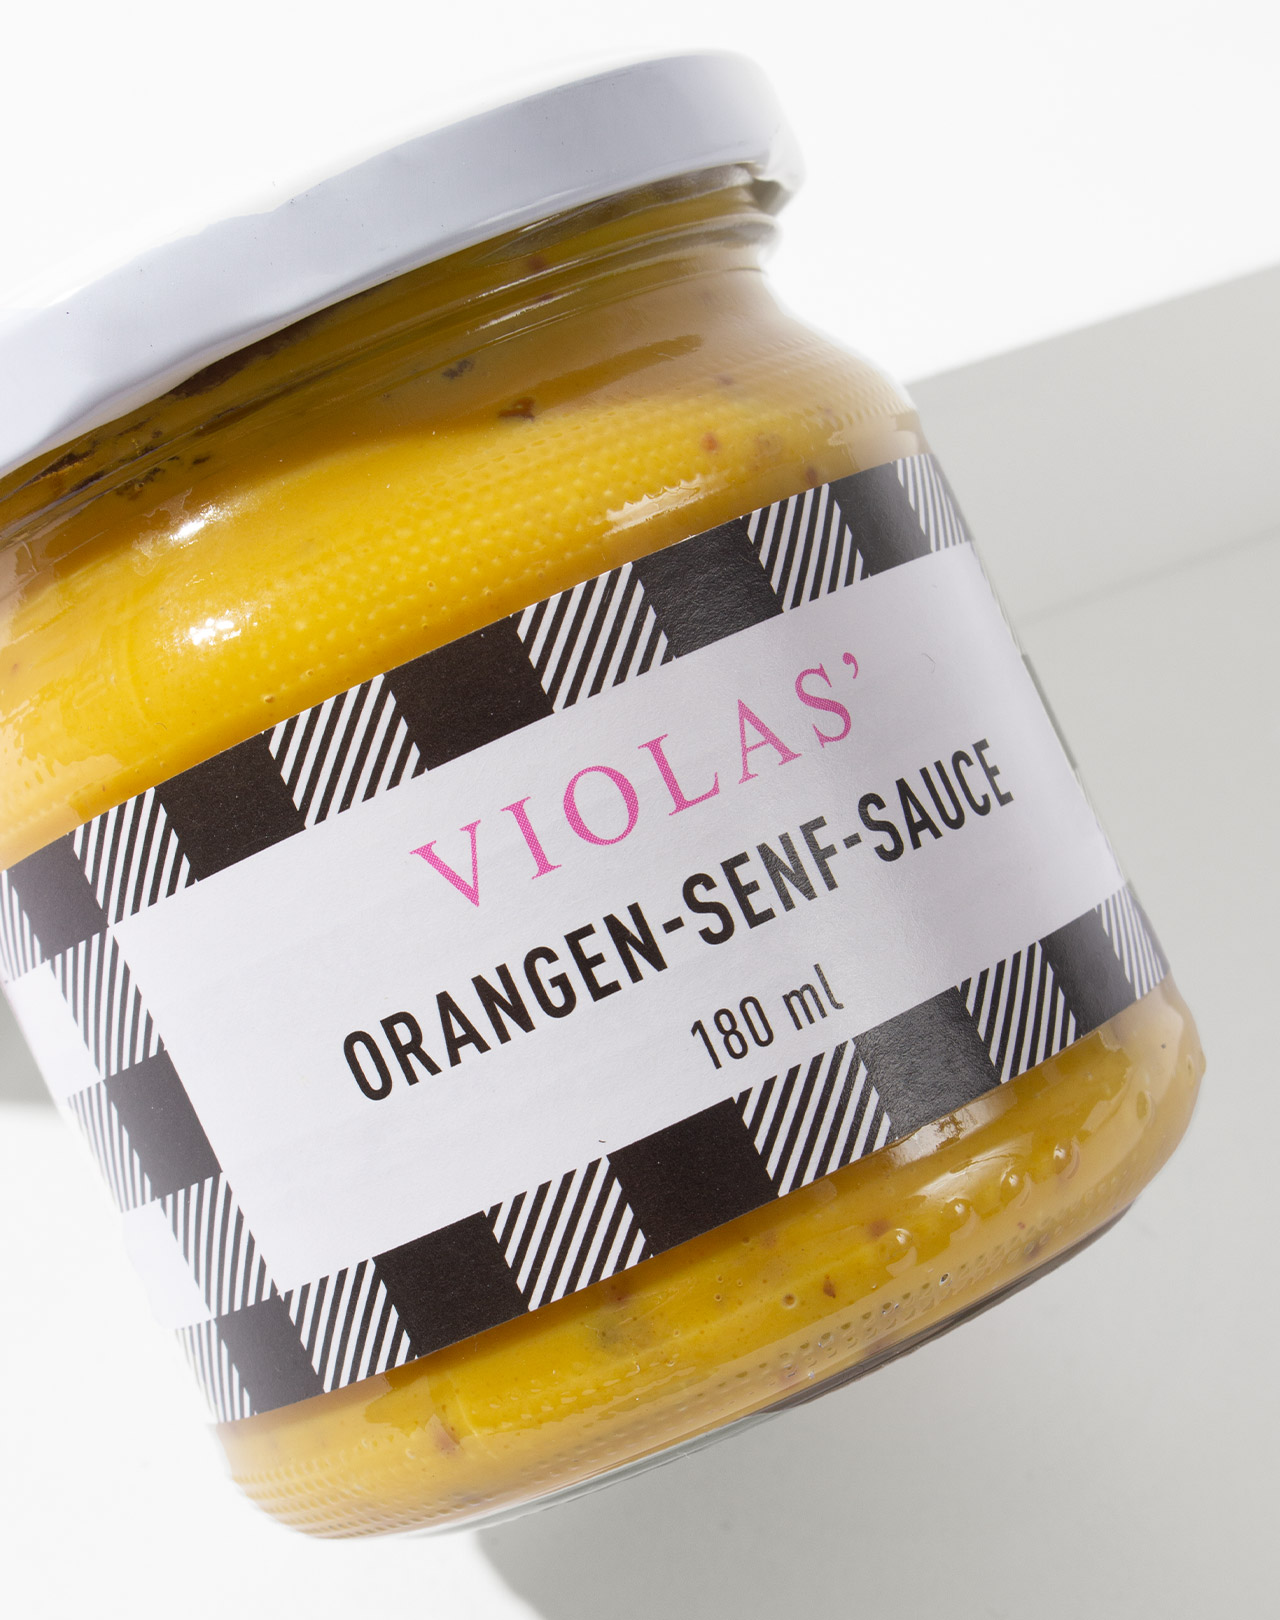 VIOLAS’ Orangen-Senf-Sauce